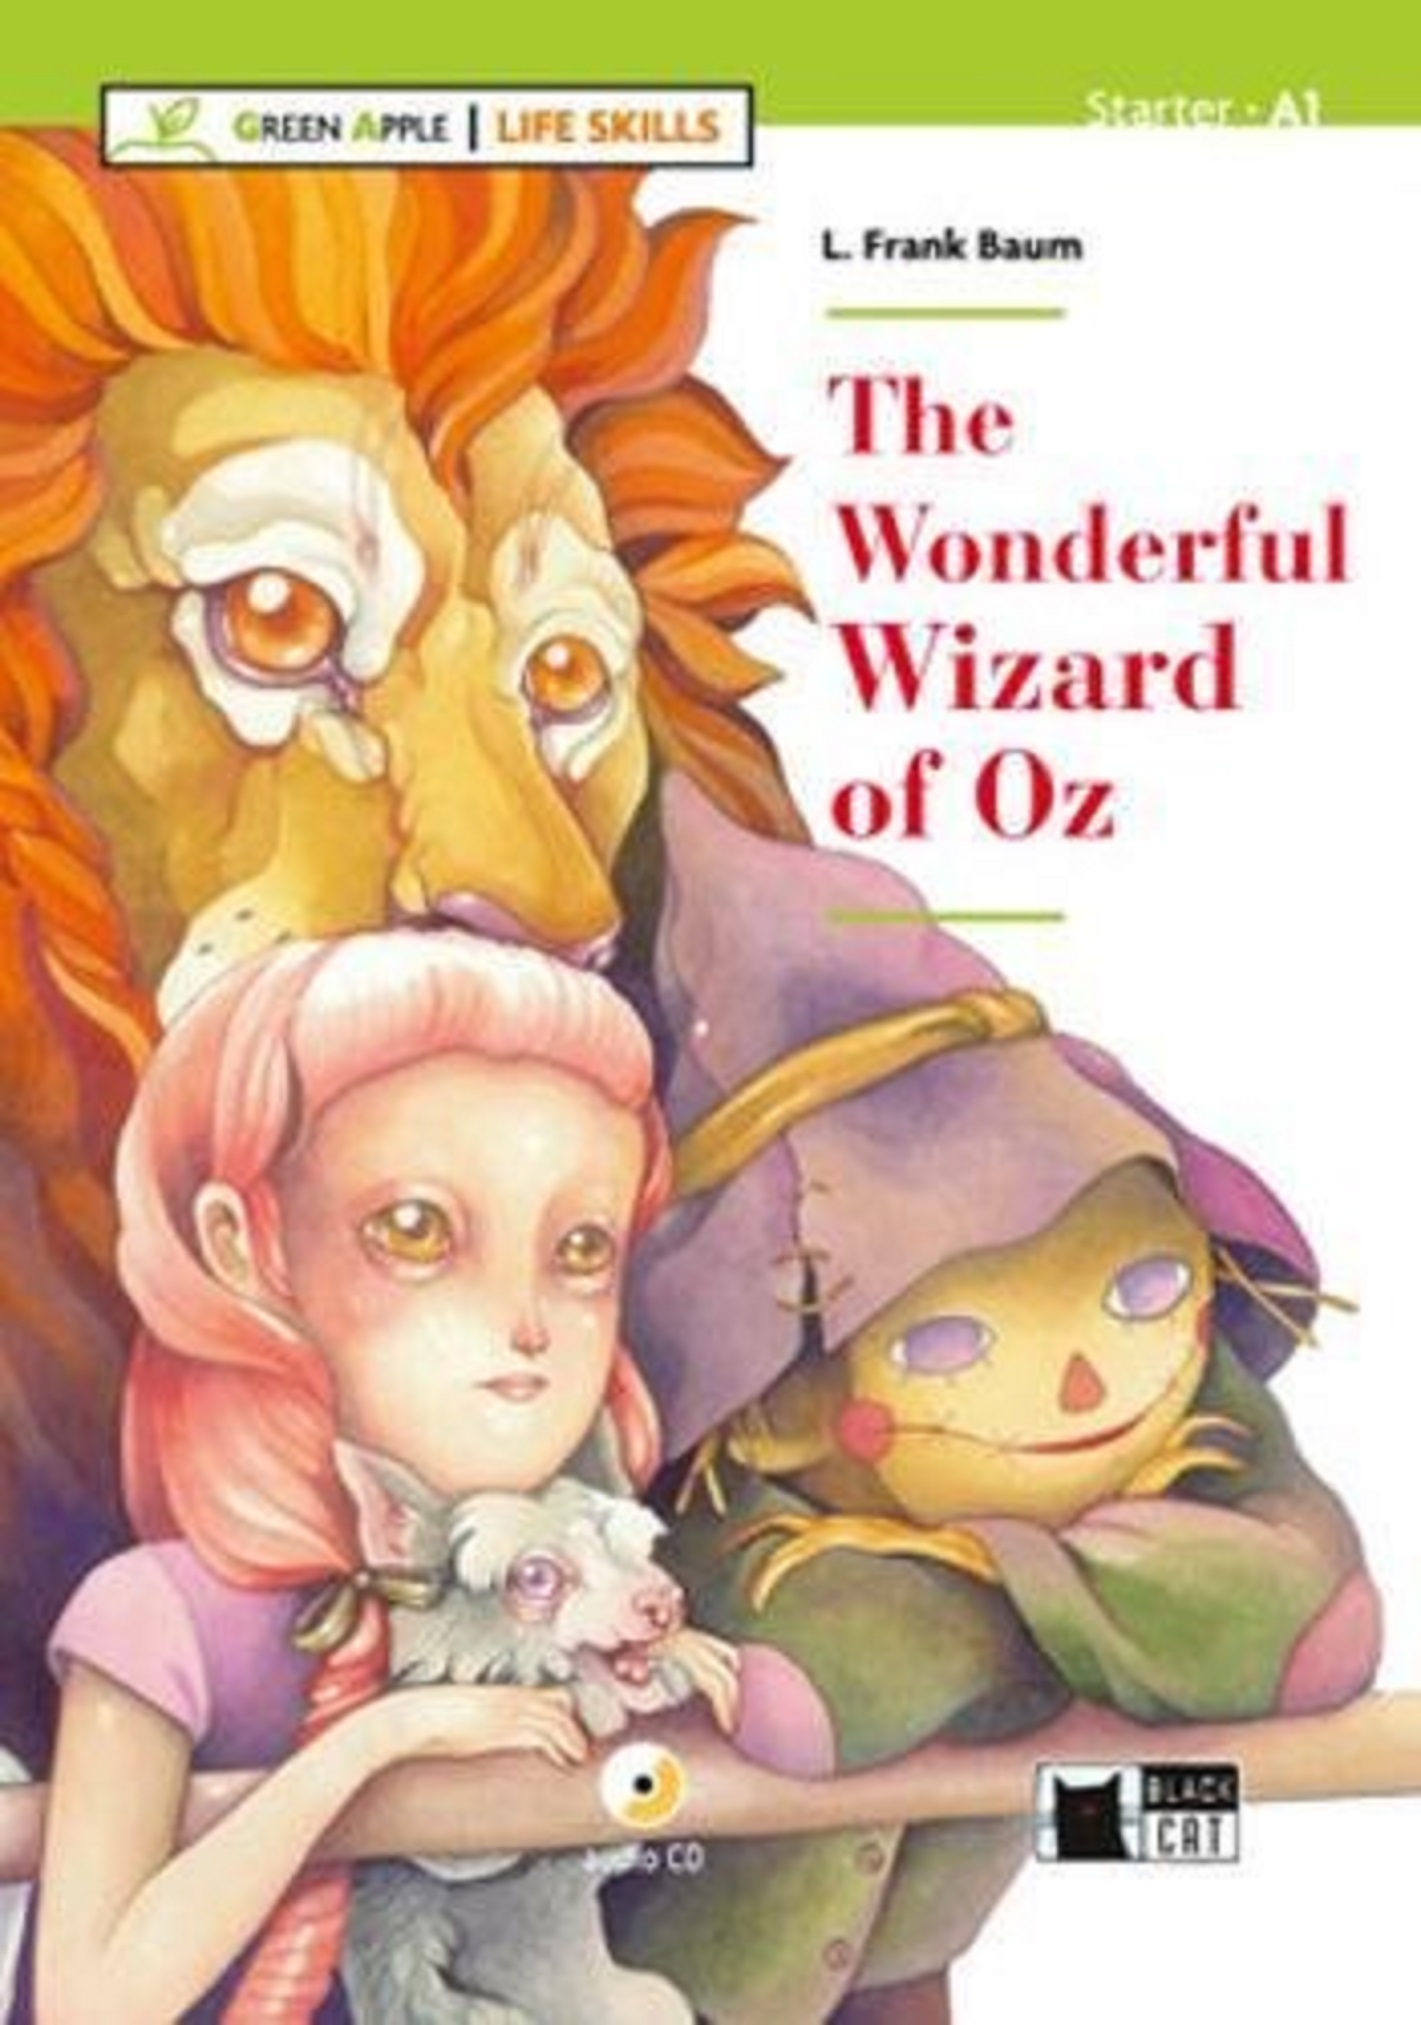 The Wonderful Wizard of Oz | L. Frank Baum image3